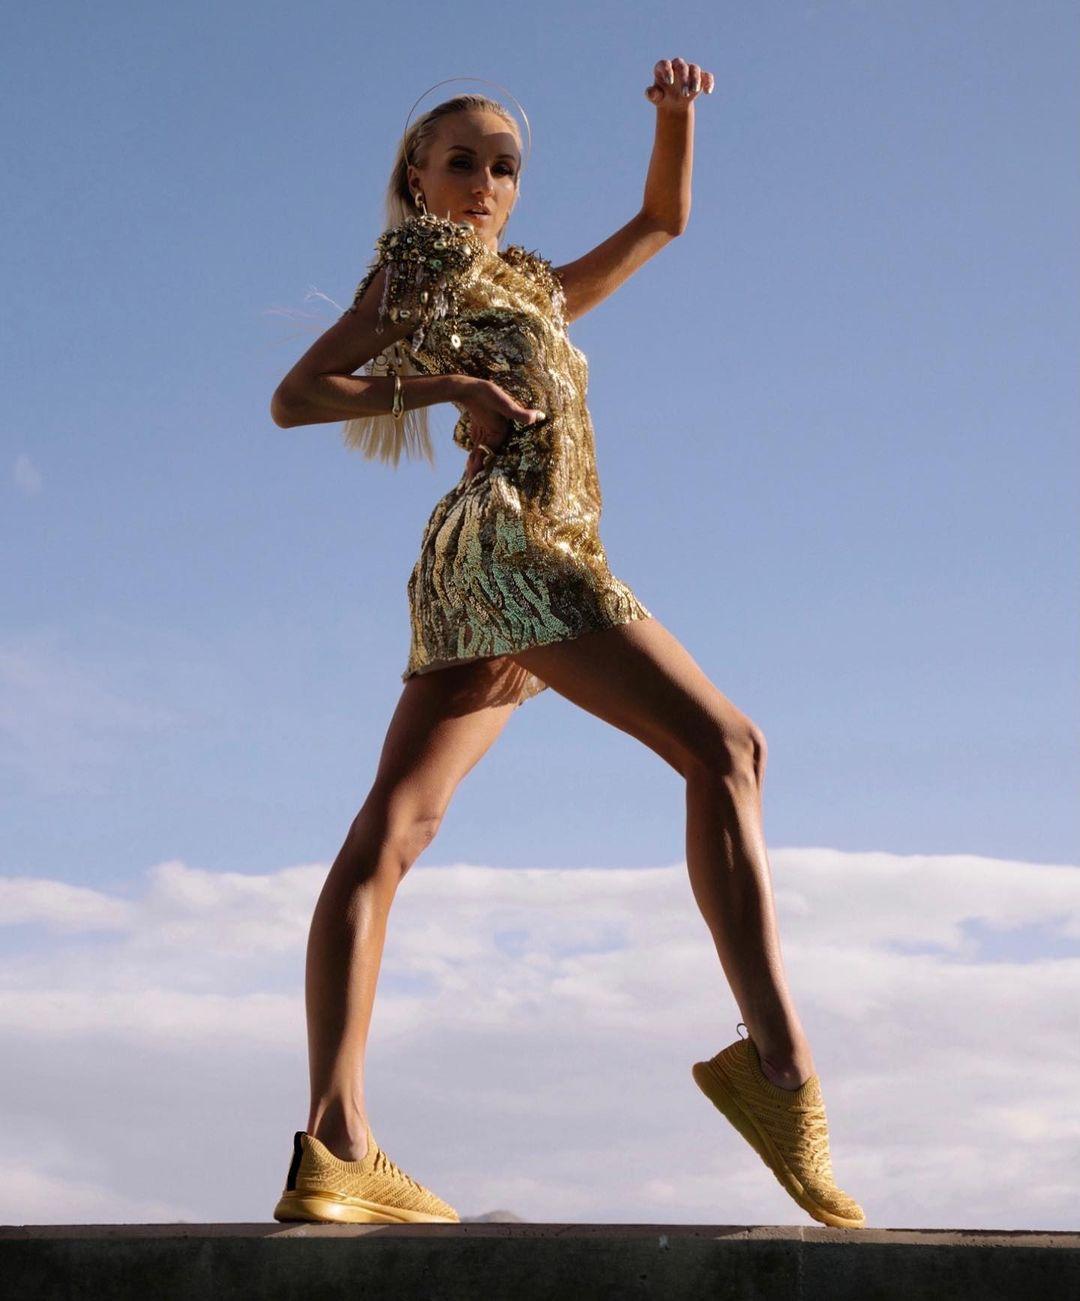 Gymnast Nastia Liukin Flaunts Flawless Legs In Gold Mini-Skirt